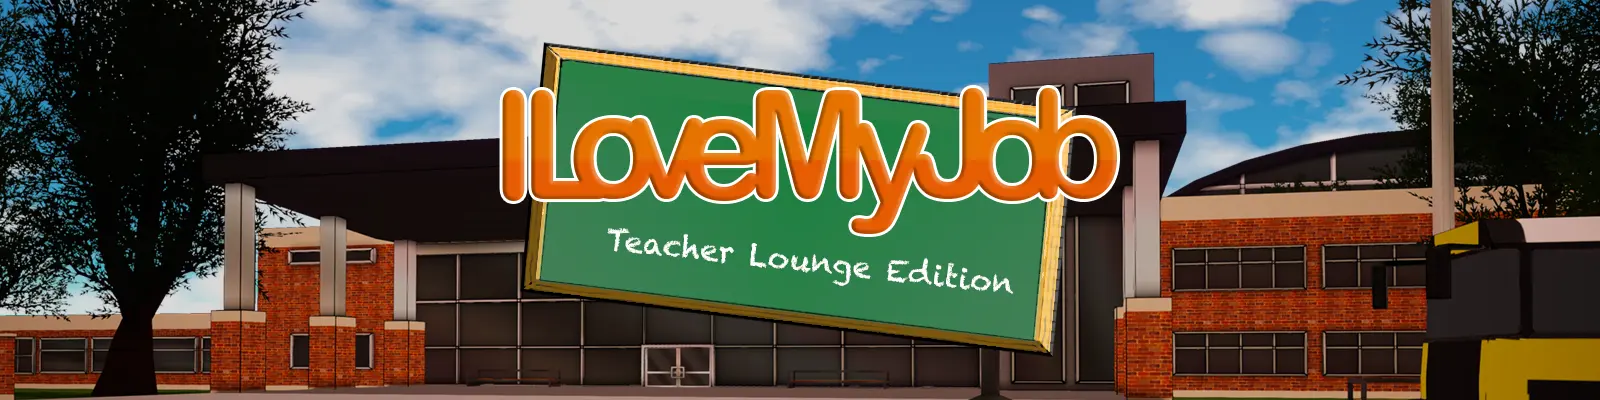 I Love My Job - Teacher Lounge Edition [v0.2.1] main image